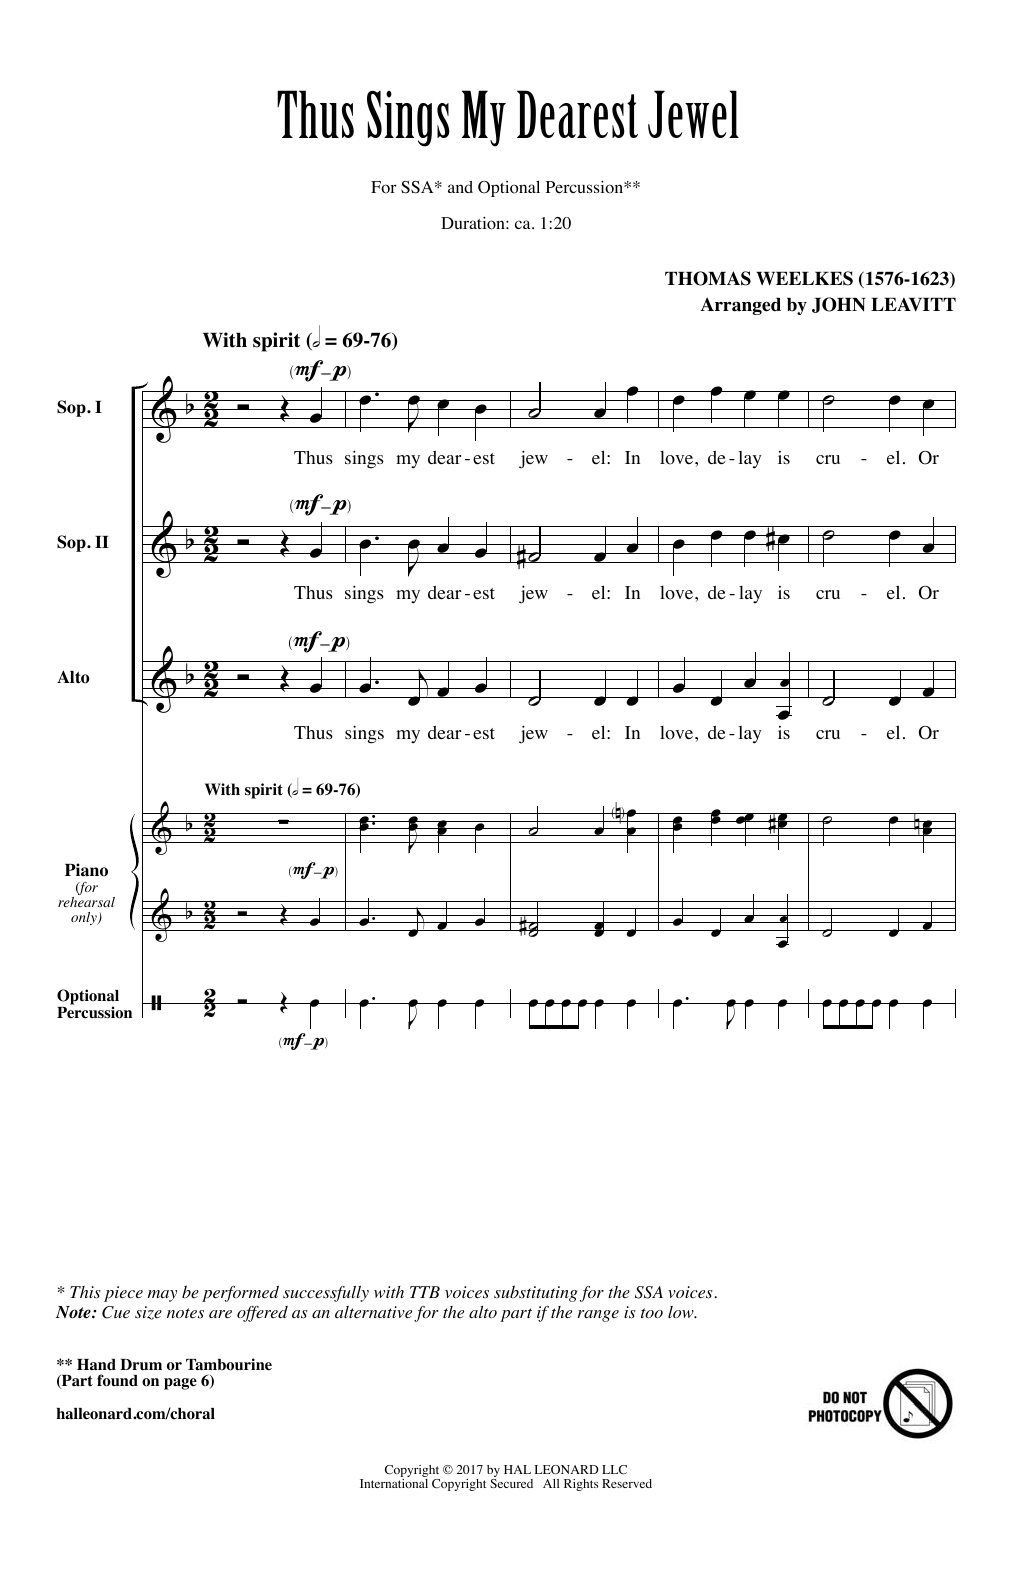 Download John Leavitt Thus Sings My Dearest Jewel Sheet Music and learn how to play SSA PDF digital score in minutes